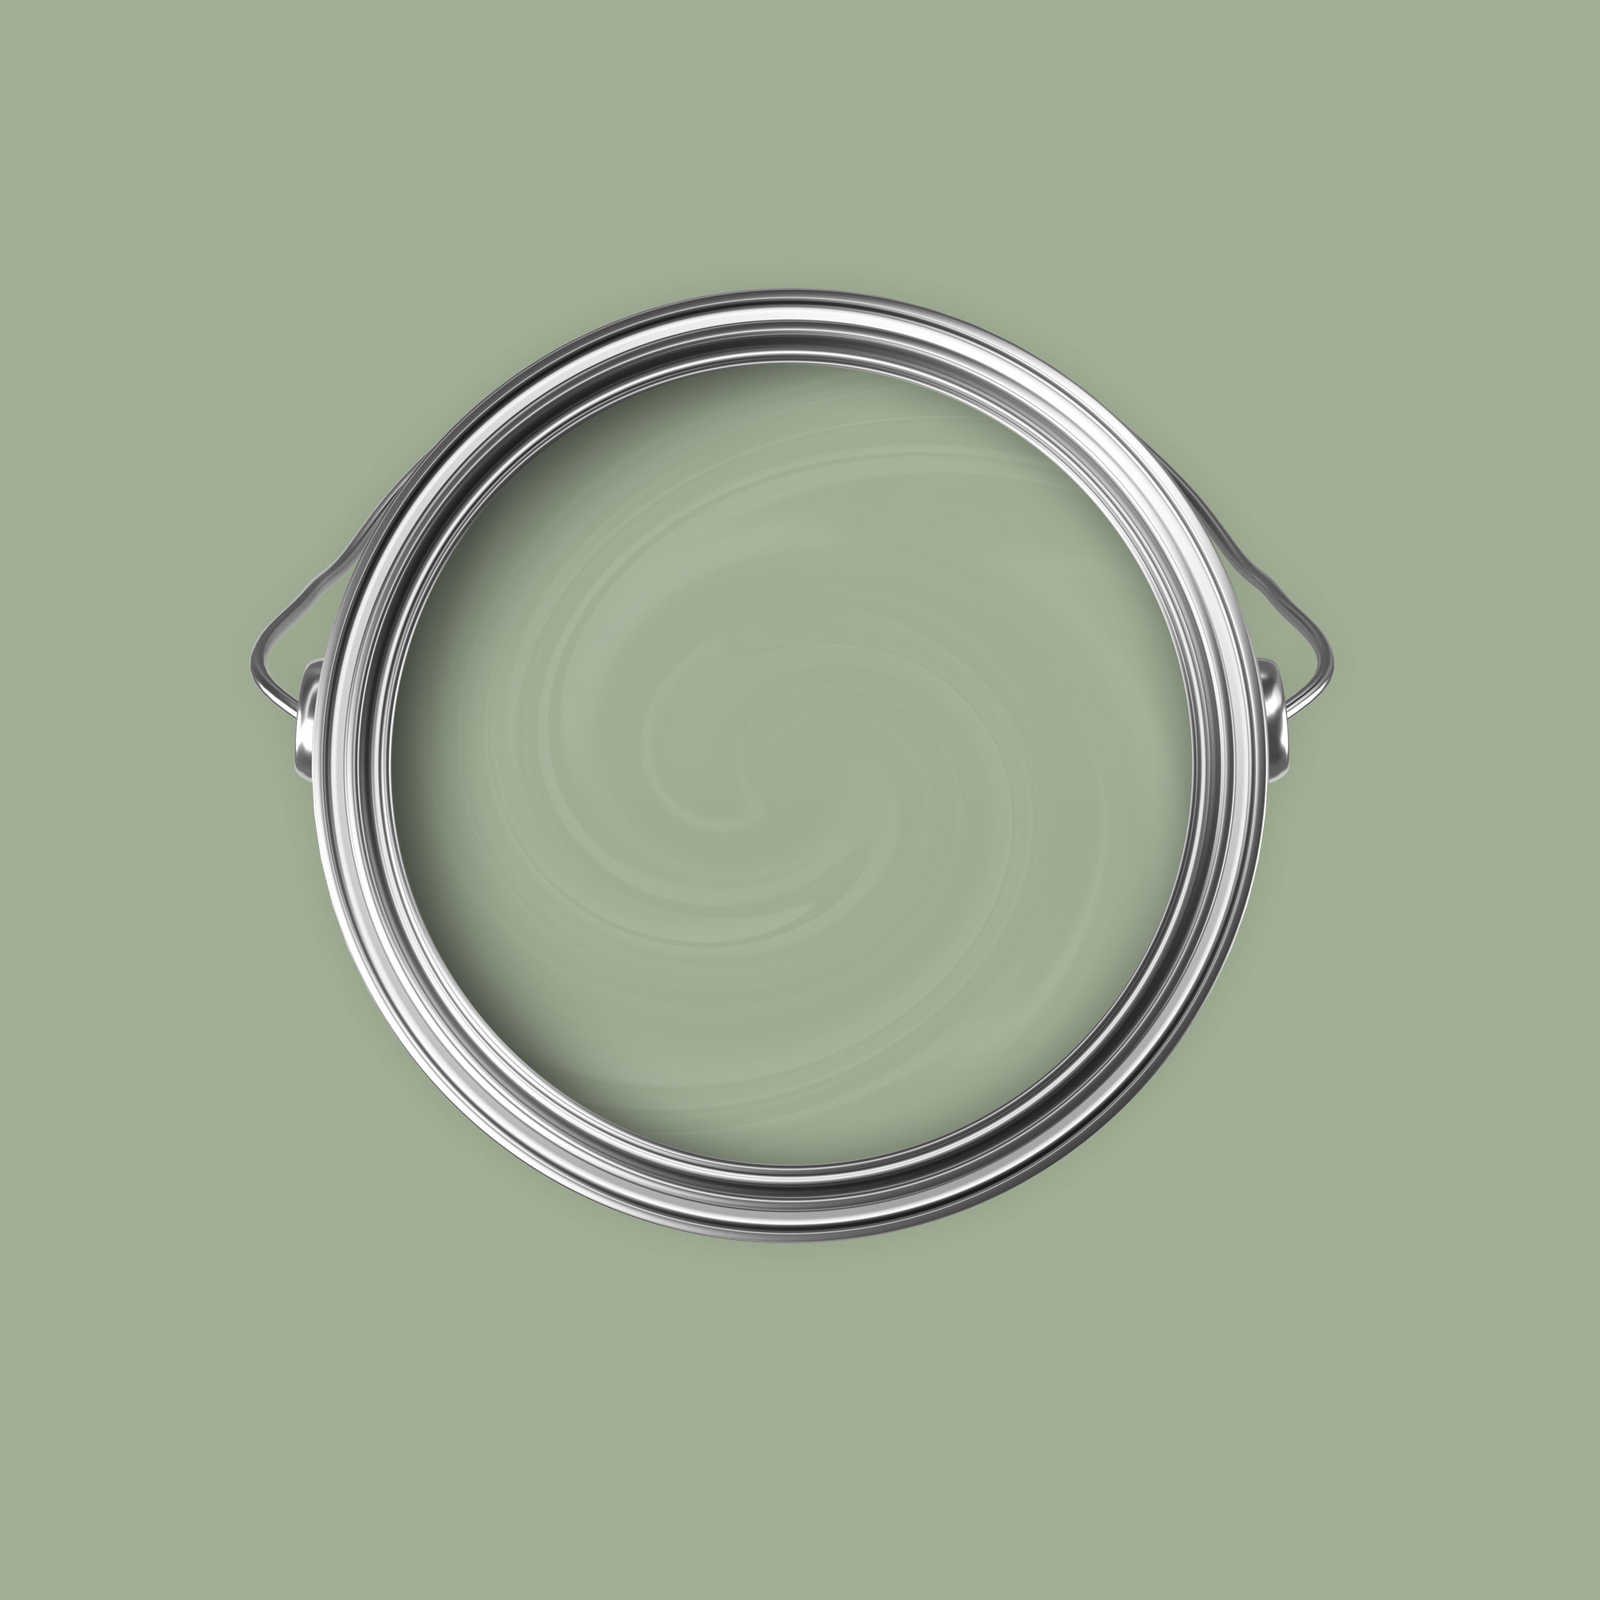             Premium Wandfarbe erdendes Olivgrün »Gorgeous Green« NW502 – 5 Liter
        